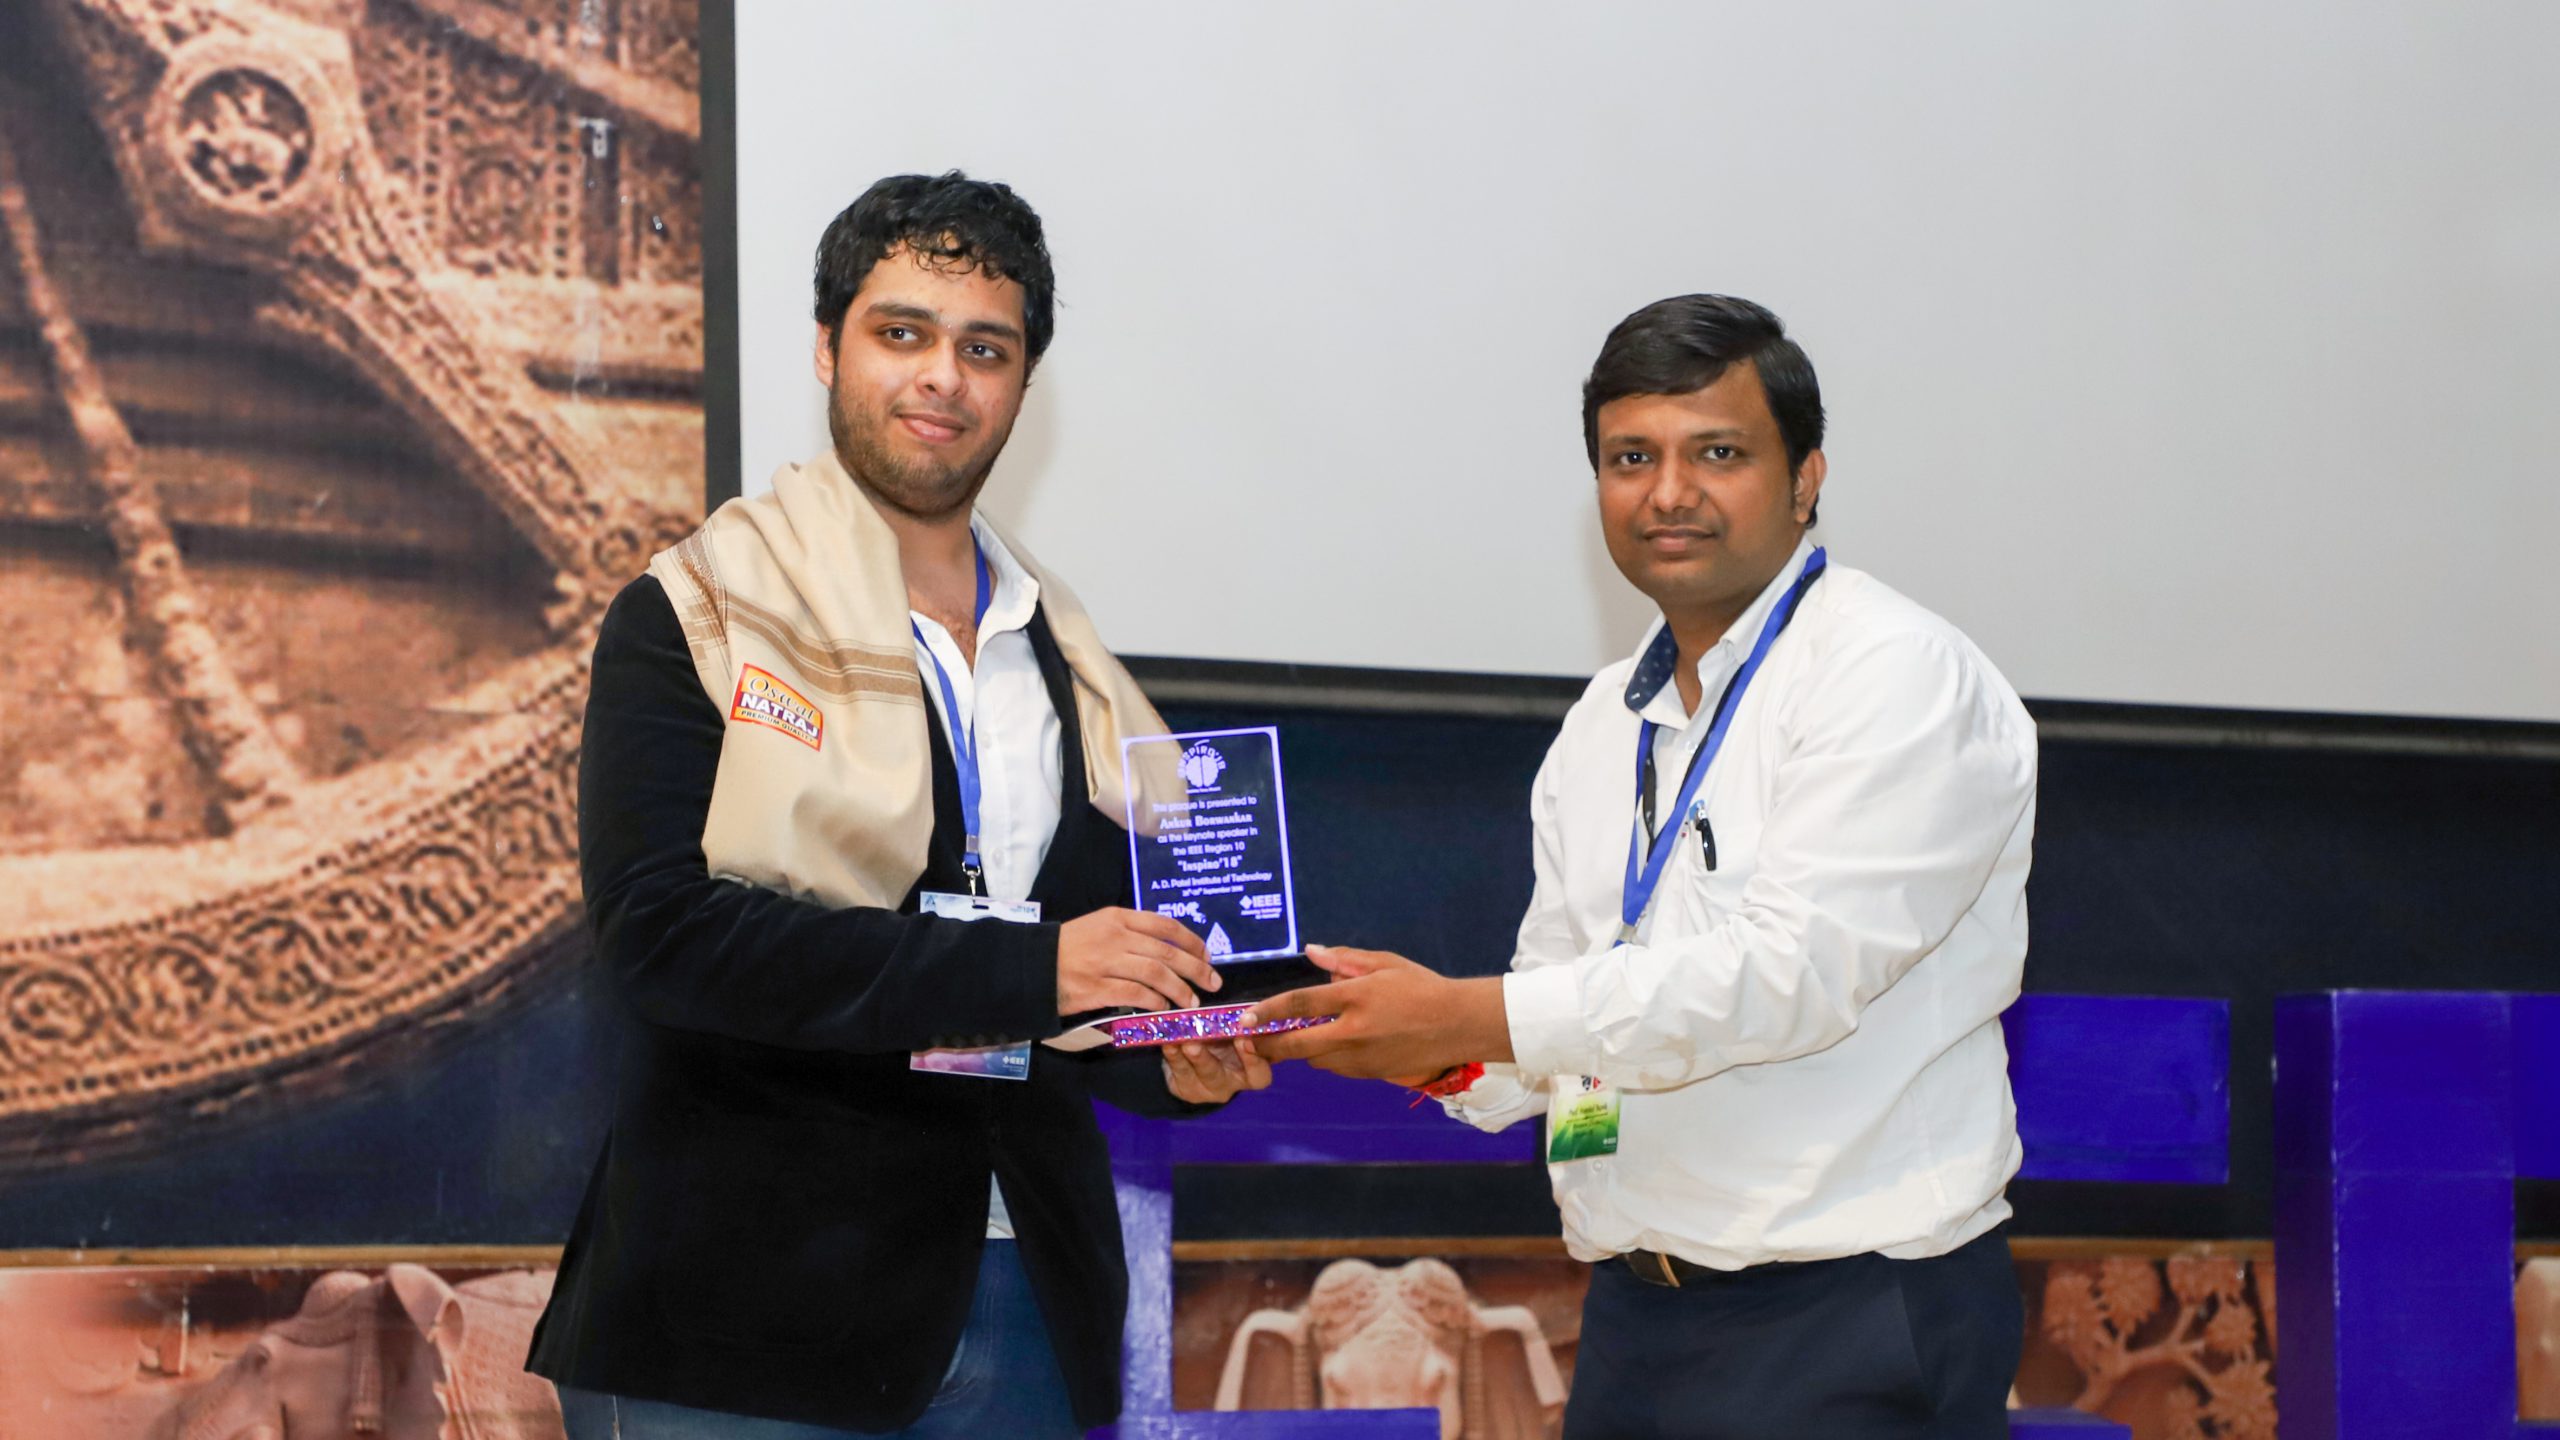 Ankur Borwankar felicitation for delivering Keynote Speech at ADIT Engineering College, Anand, Gujarat